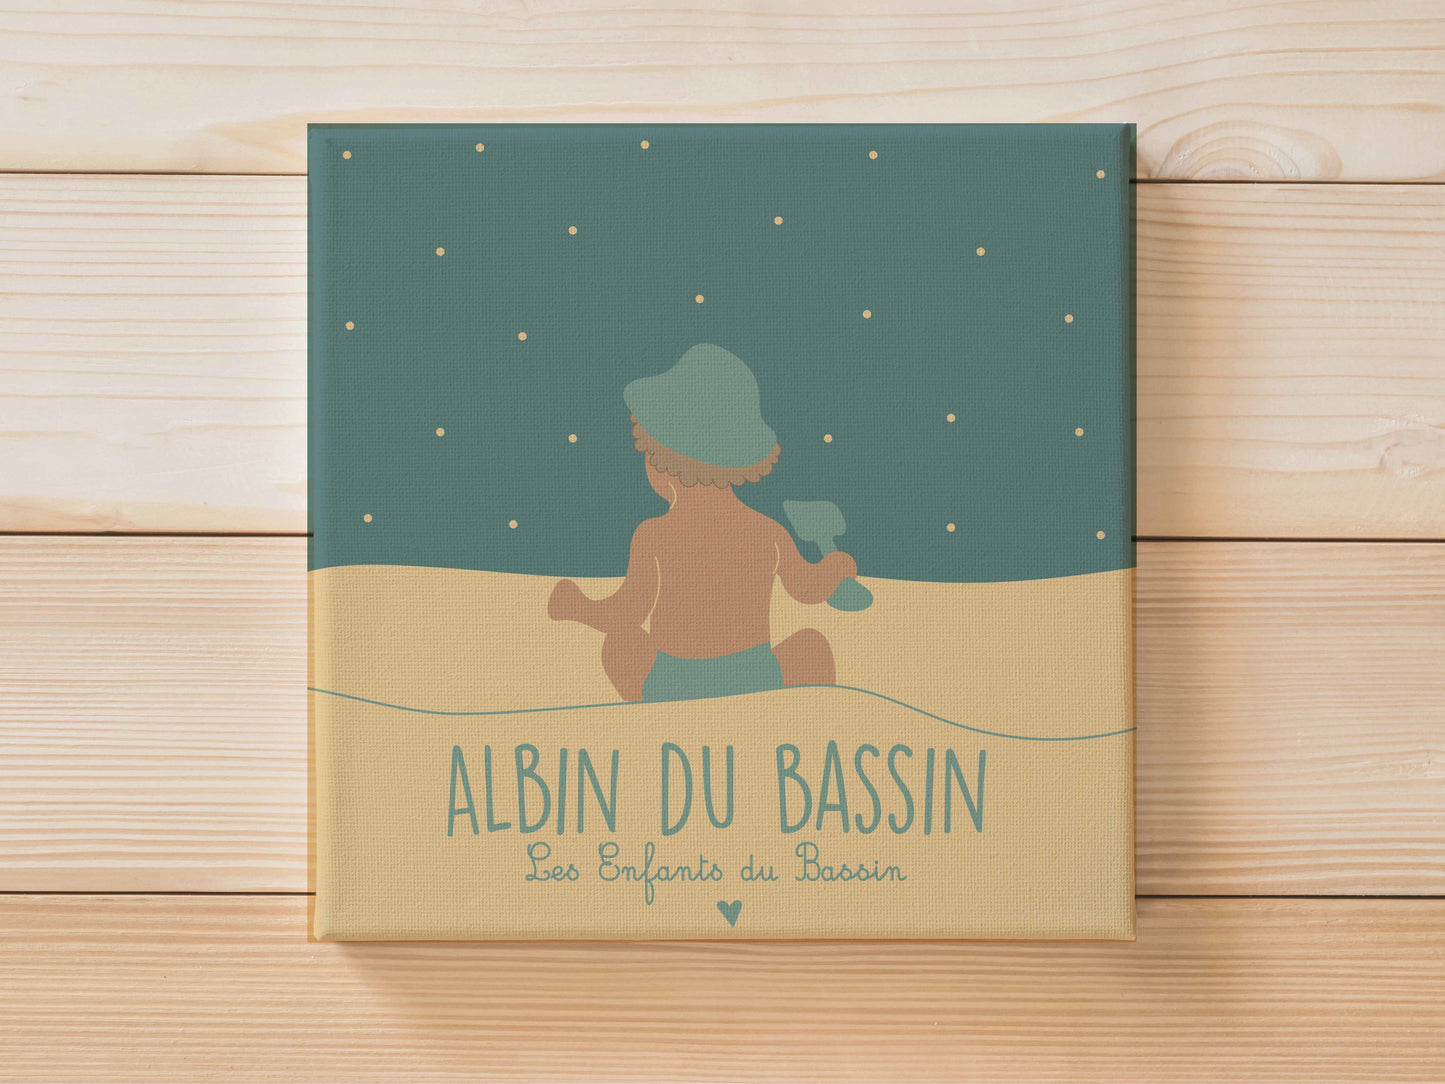 Albin du Bassin